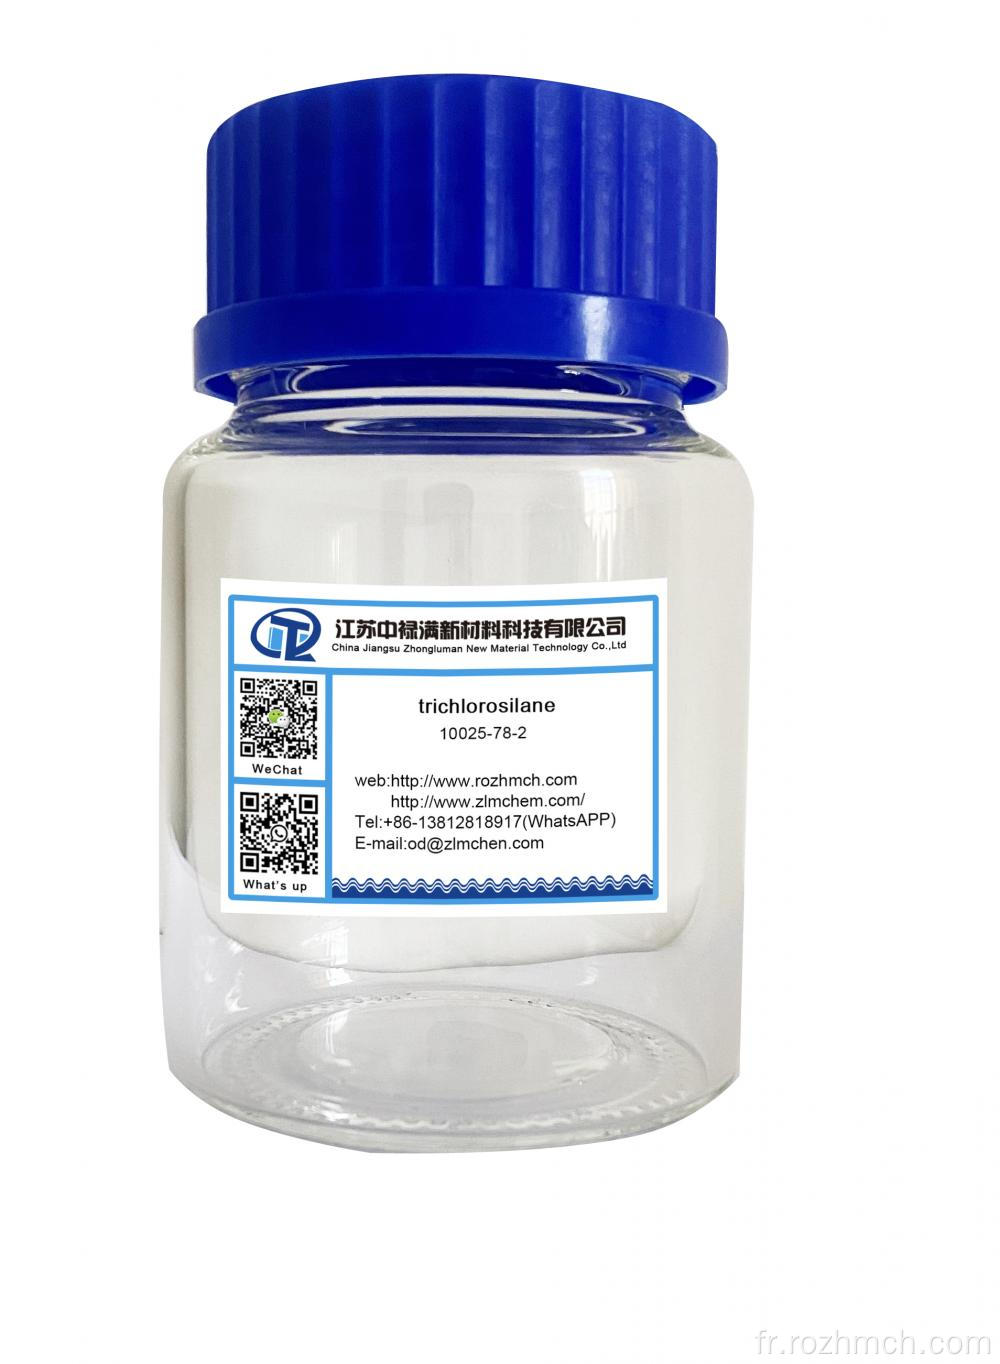 Trichlorosilane CAS no 10025-78-2